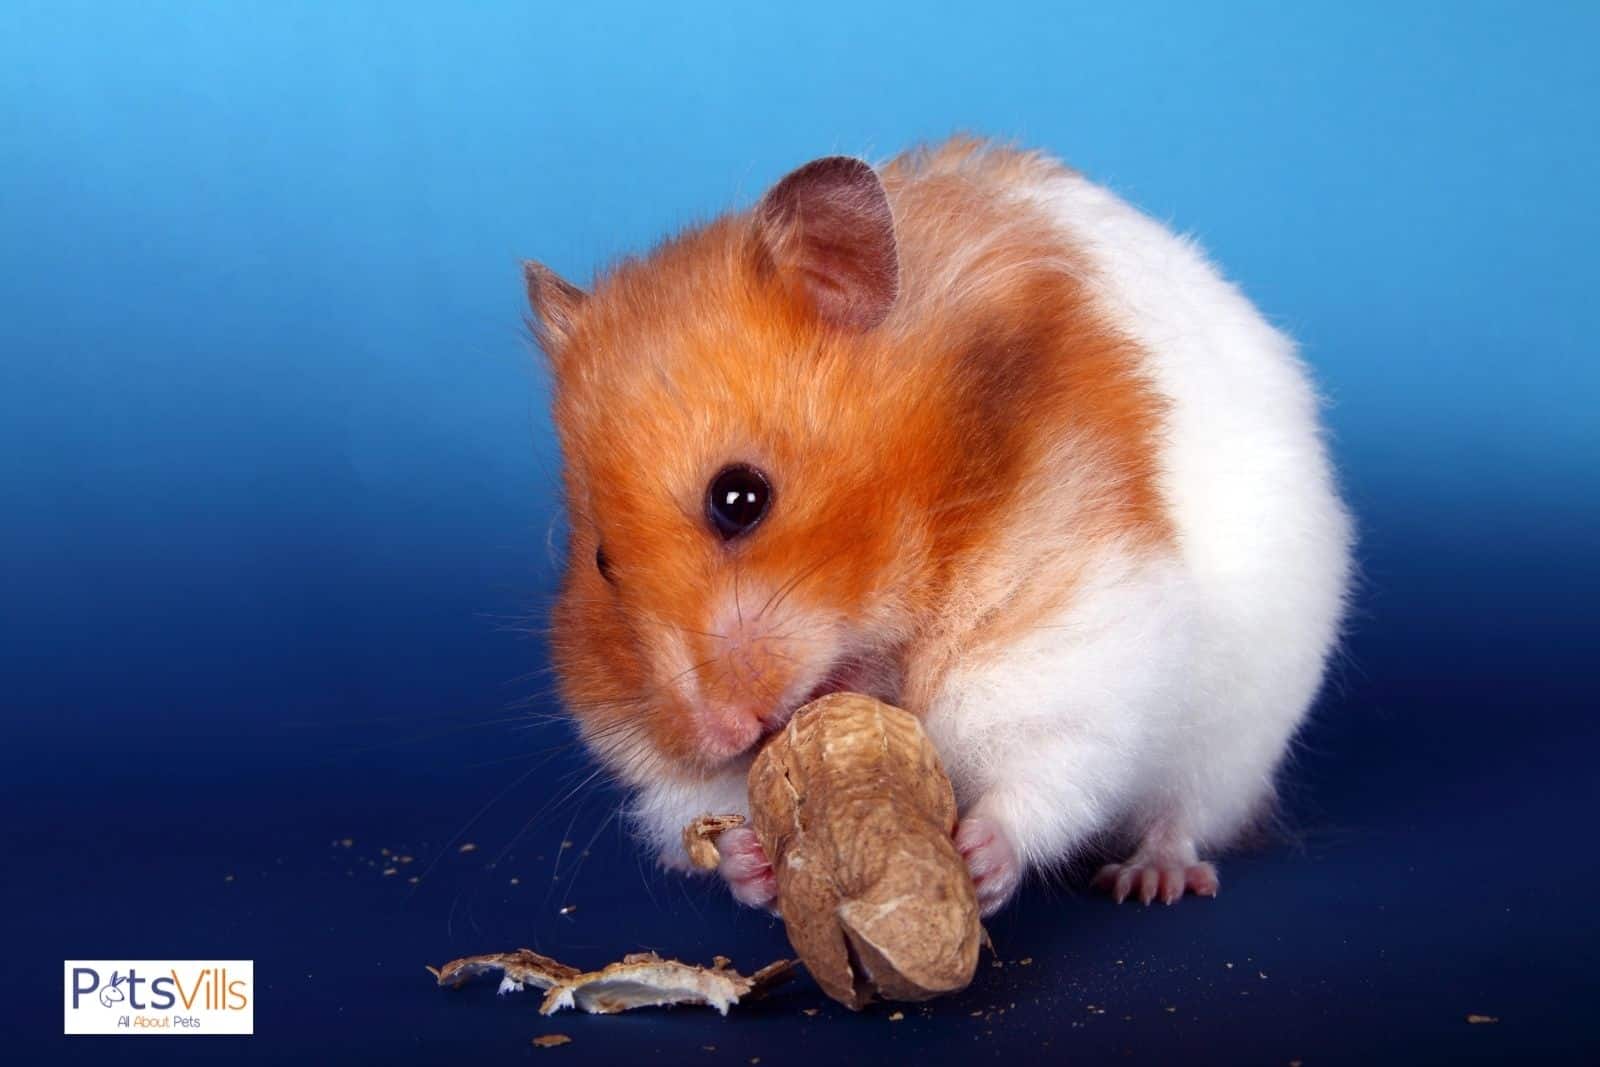 hamster alimentandose de carne.jpg